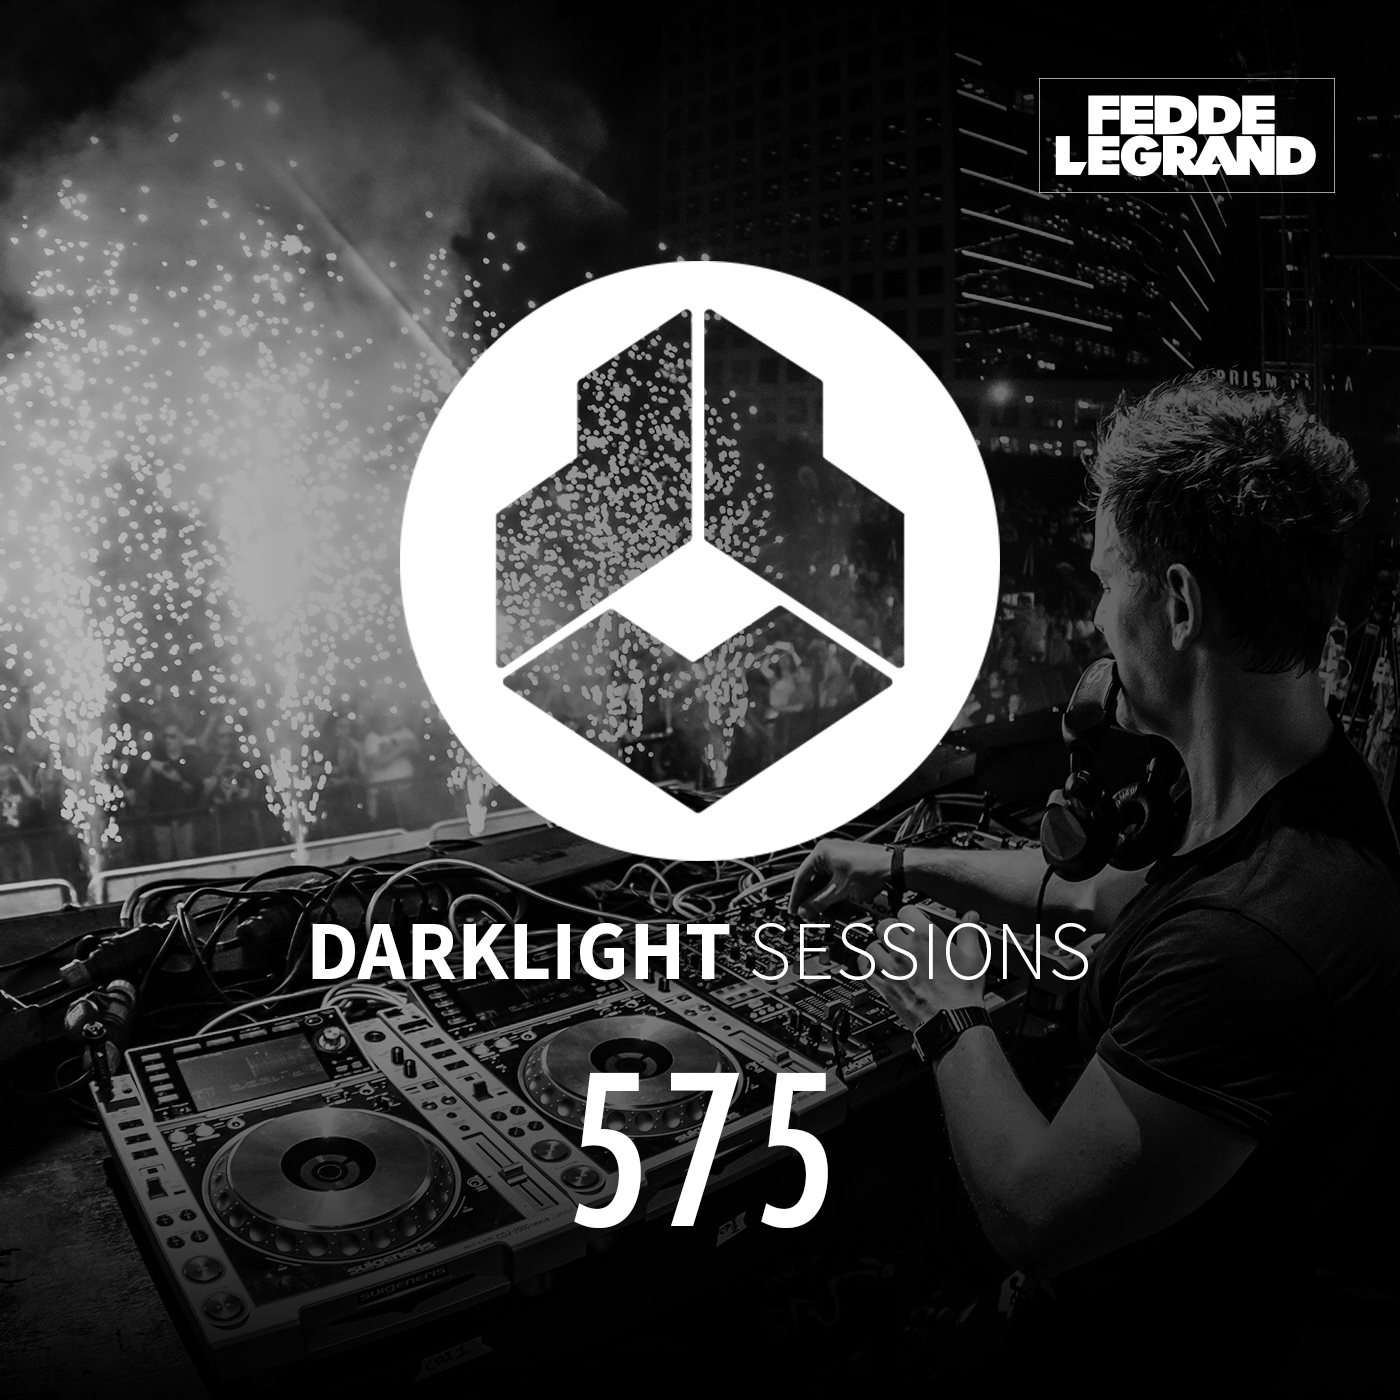 Darklight Sessions 575